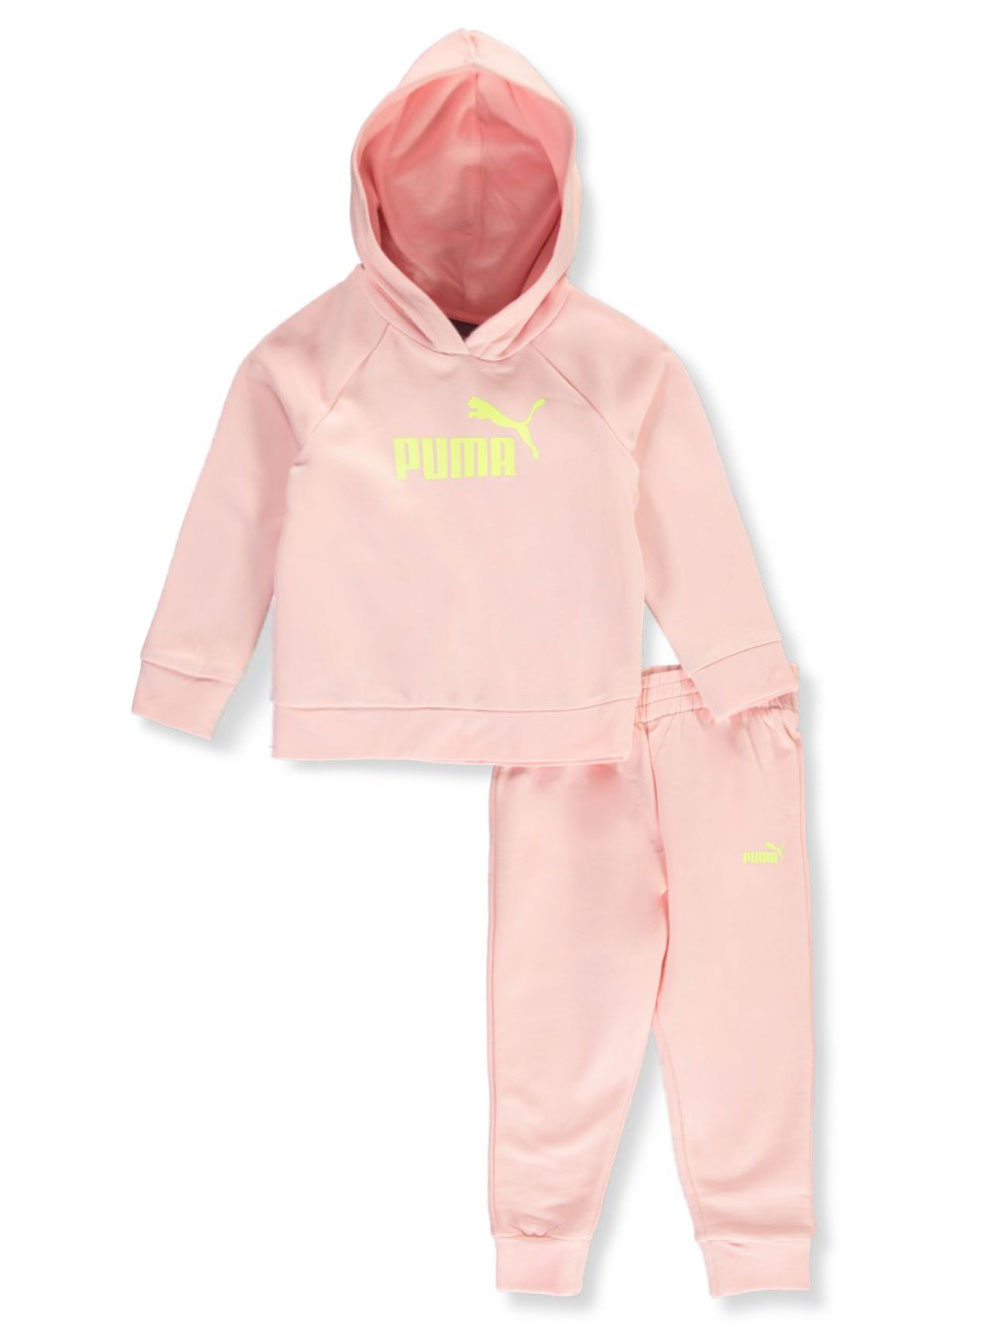 puma toddler sweatsuit